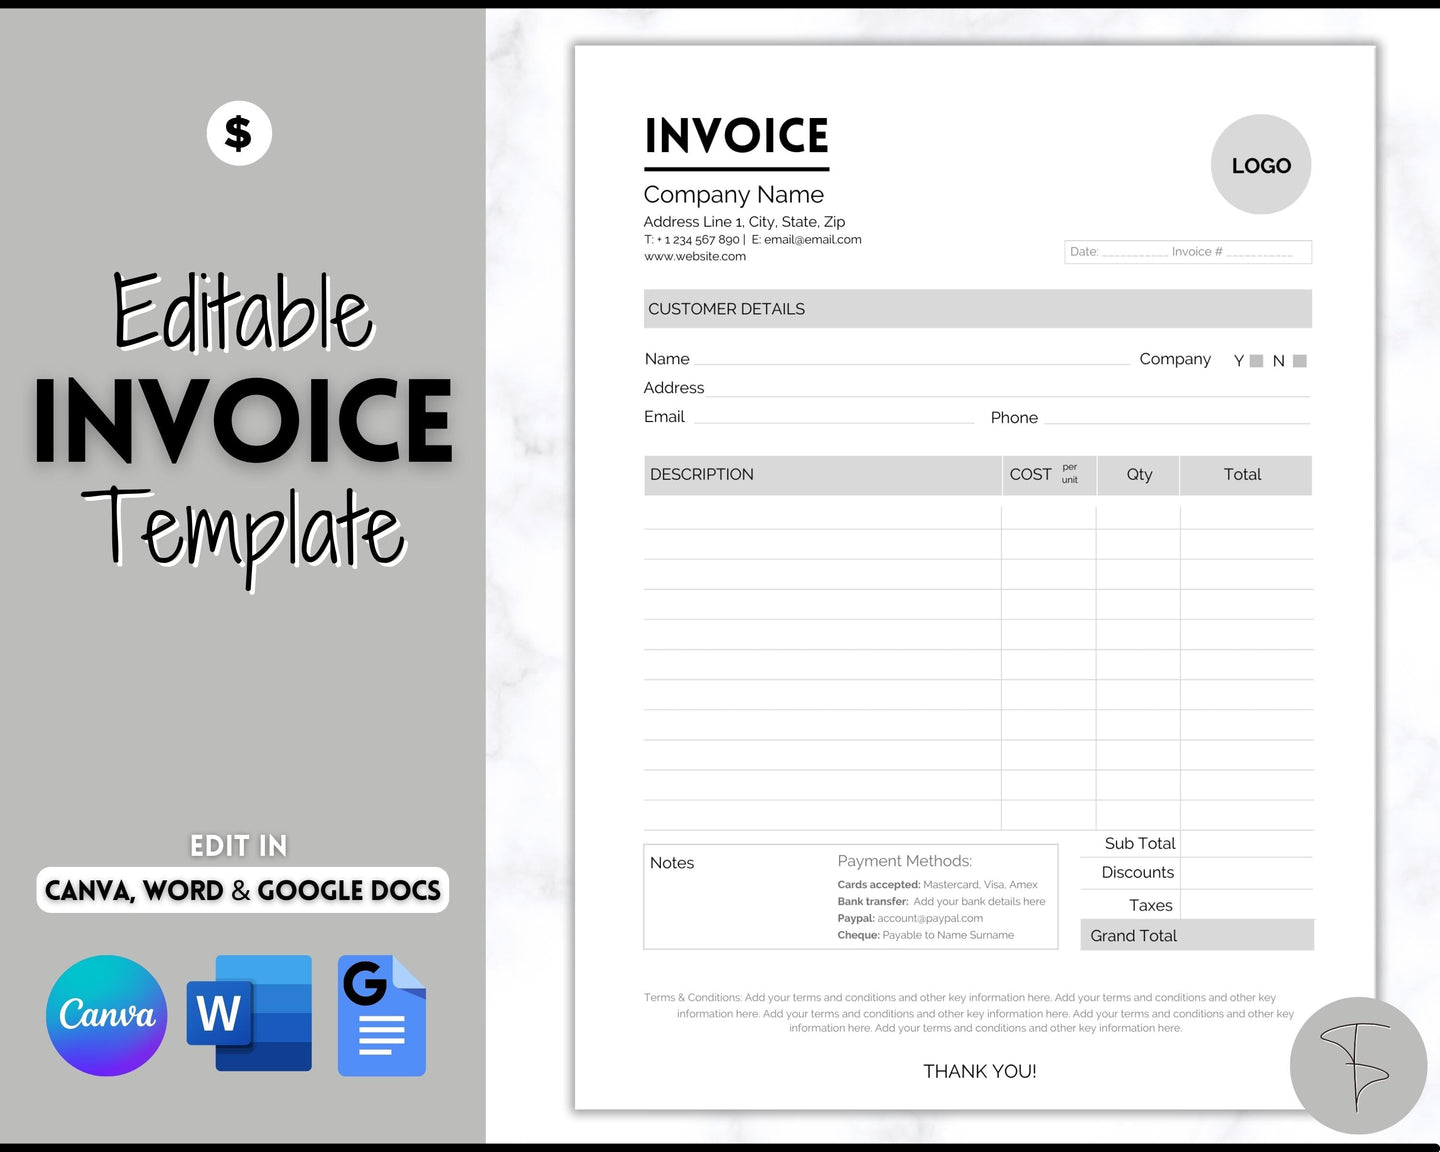 Invoice Template, EDITABLE Receipt Form, Small Business, Receipt Order, Job Estimate Form, Word, Canva, Google Docs, Quote, Proposal